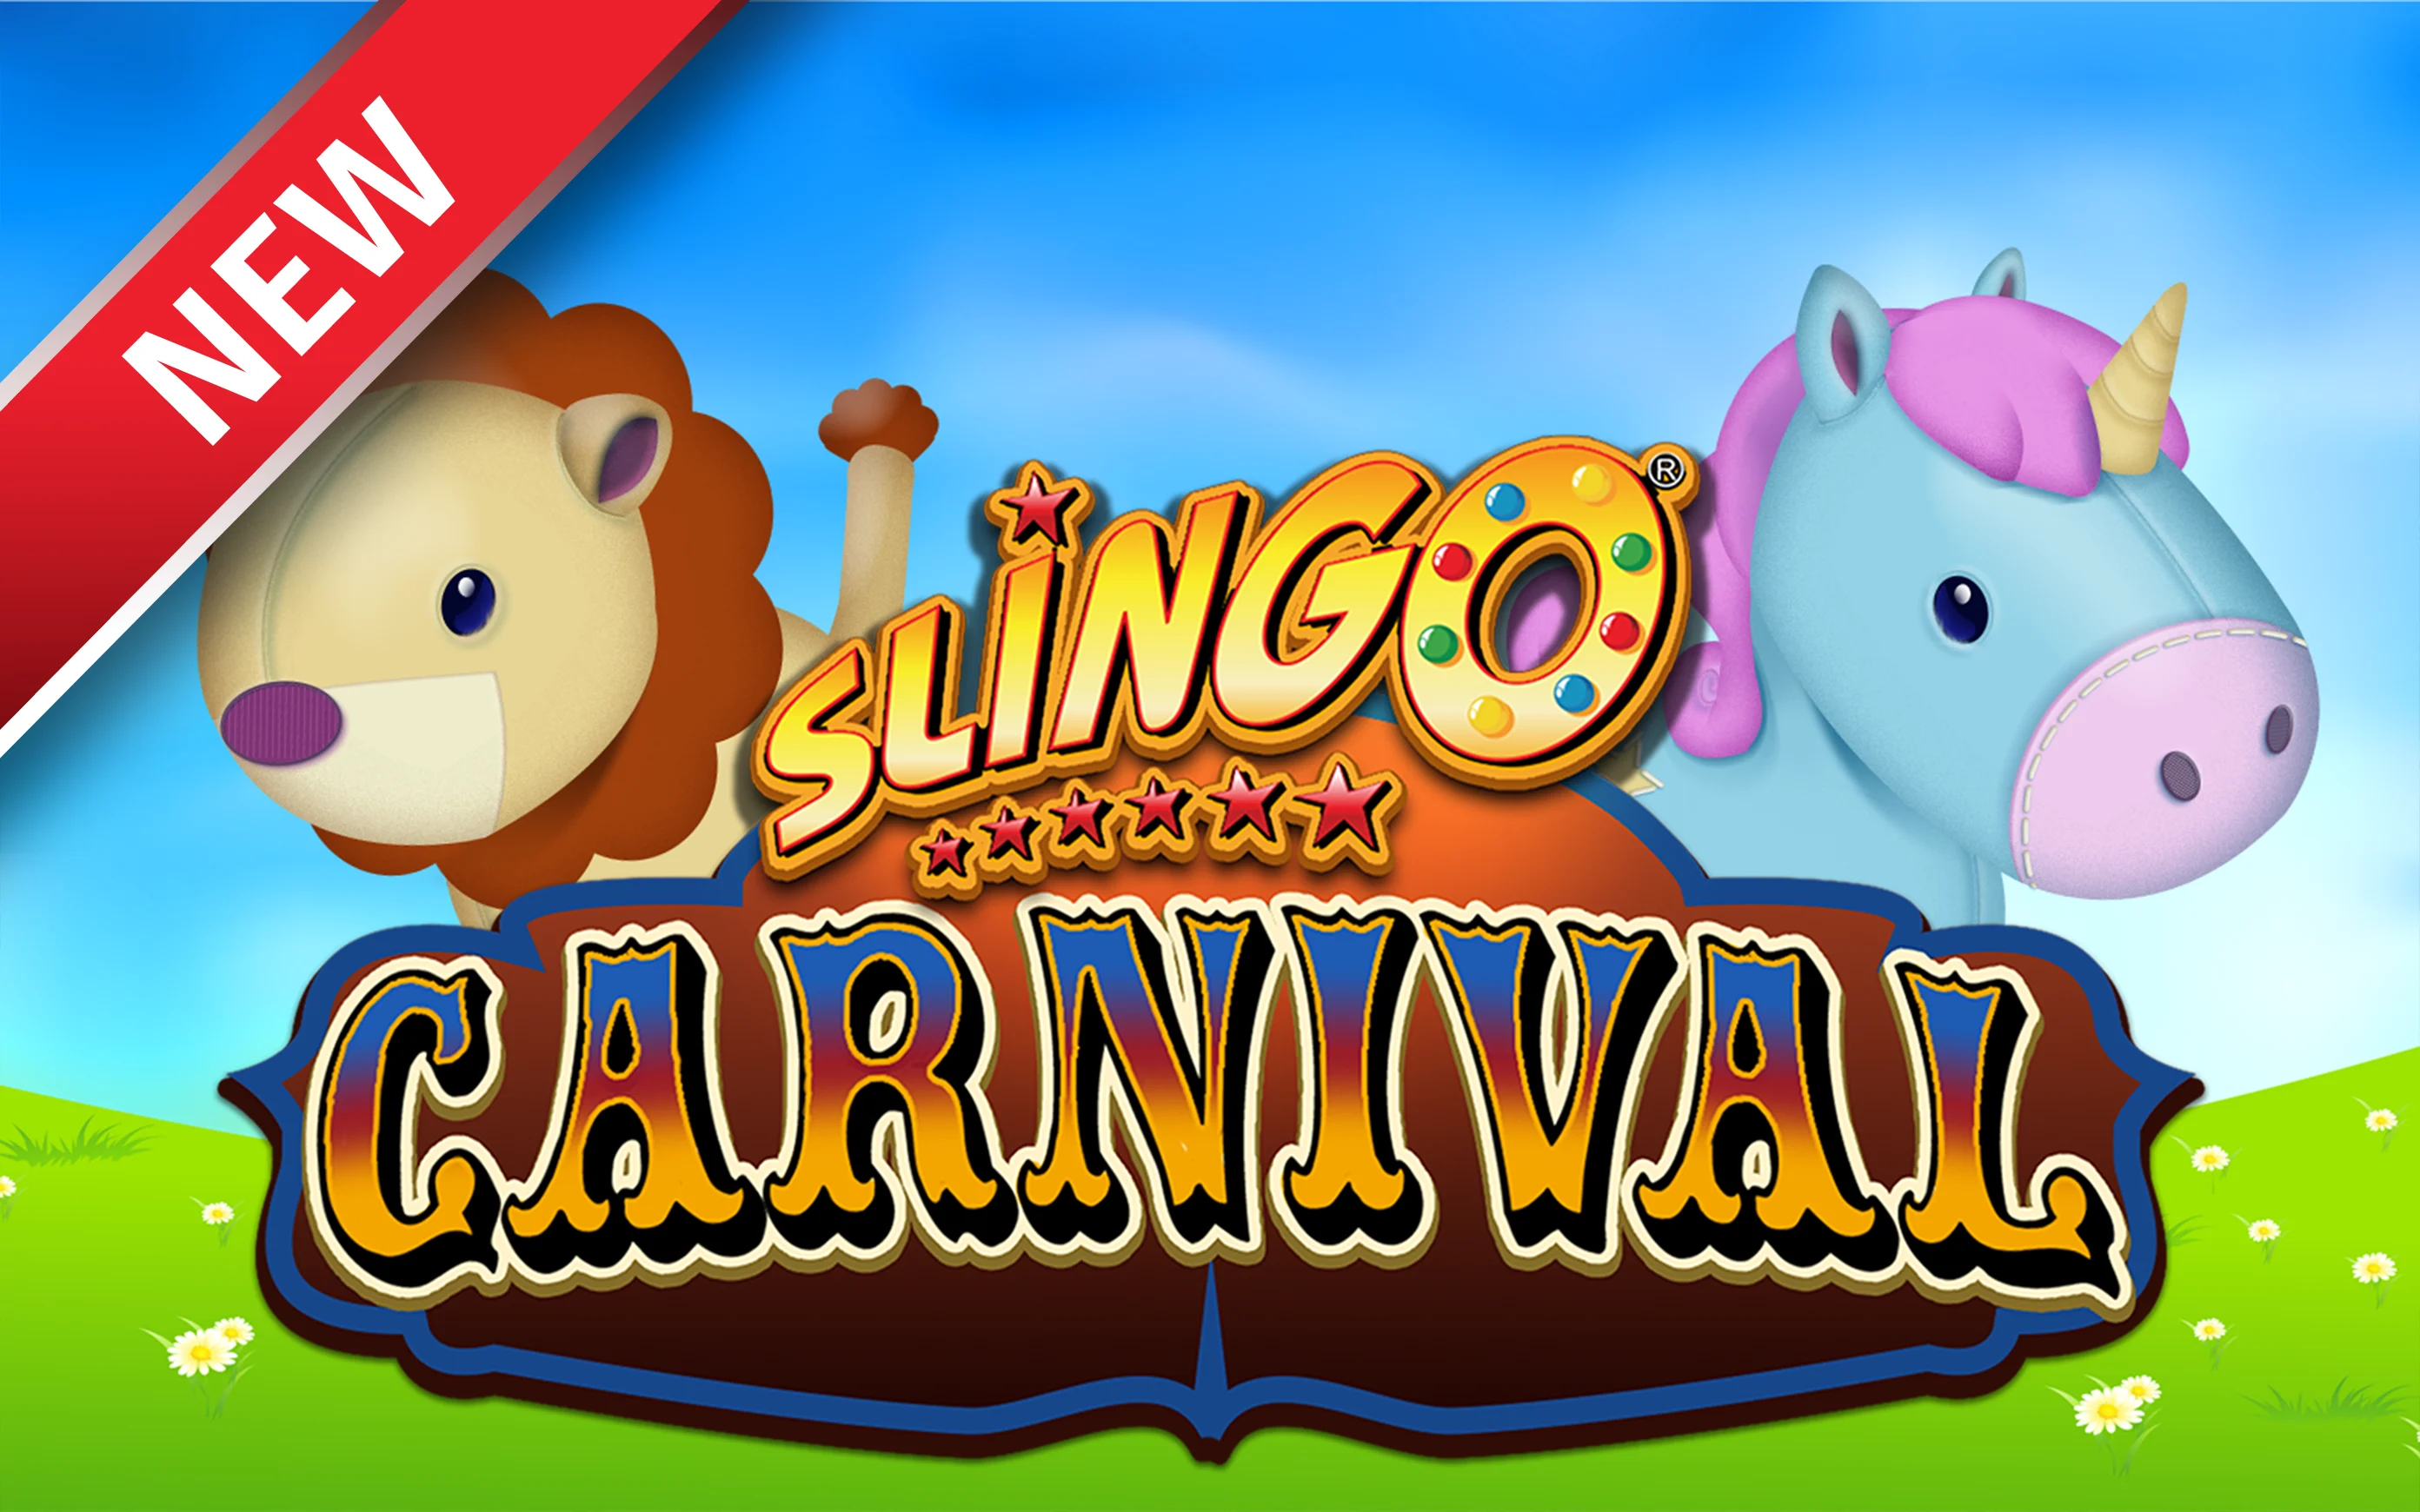 Play Slingo Carnival on Starcasino.be online casino